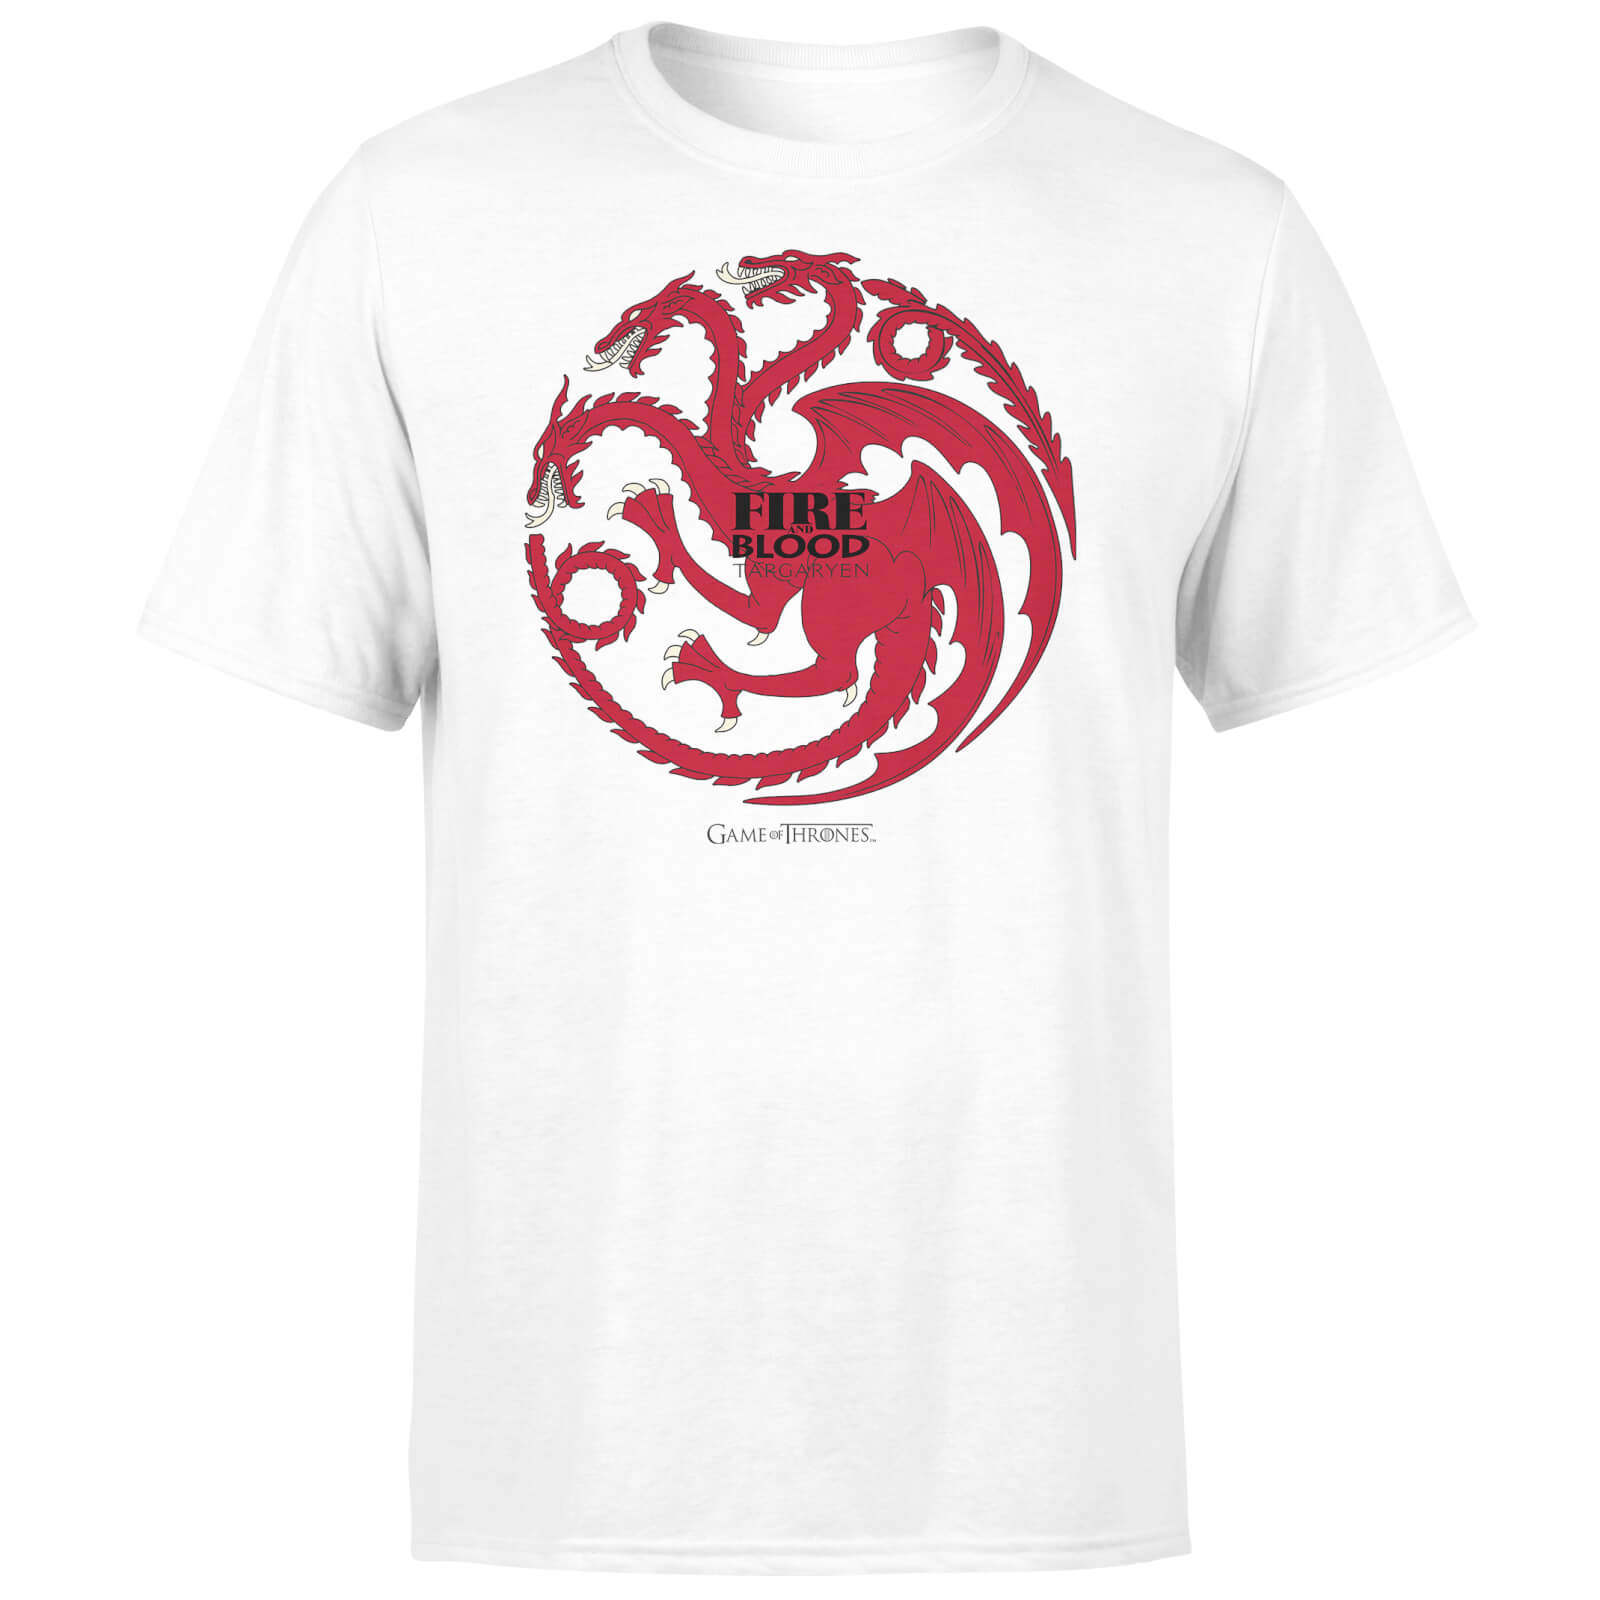 Game of Thrones Targaryen Fire and Blood Men's White T-Shirt - S - White